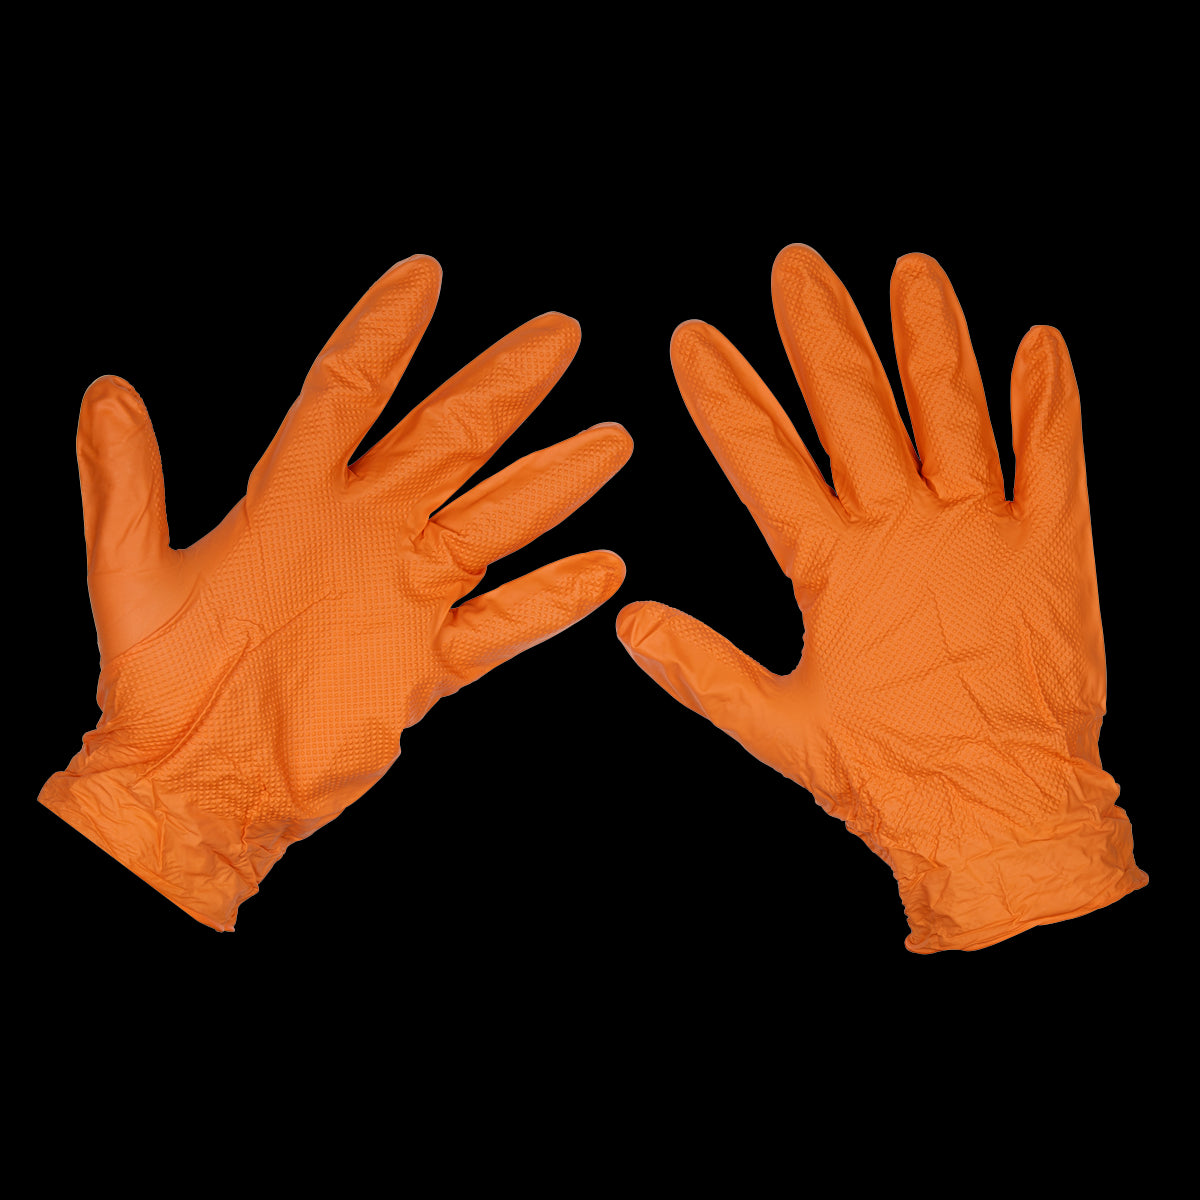 Sealey SSP56L Orange Diamond Grip Extra-Thick Nitrile Powder- Free Gloves Large - Pack of 50